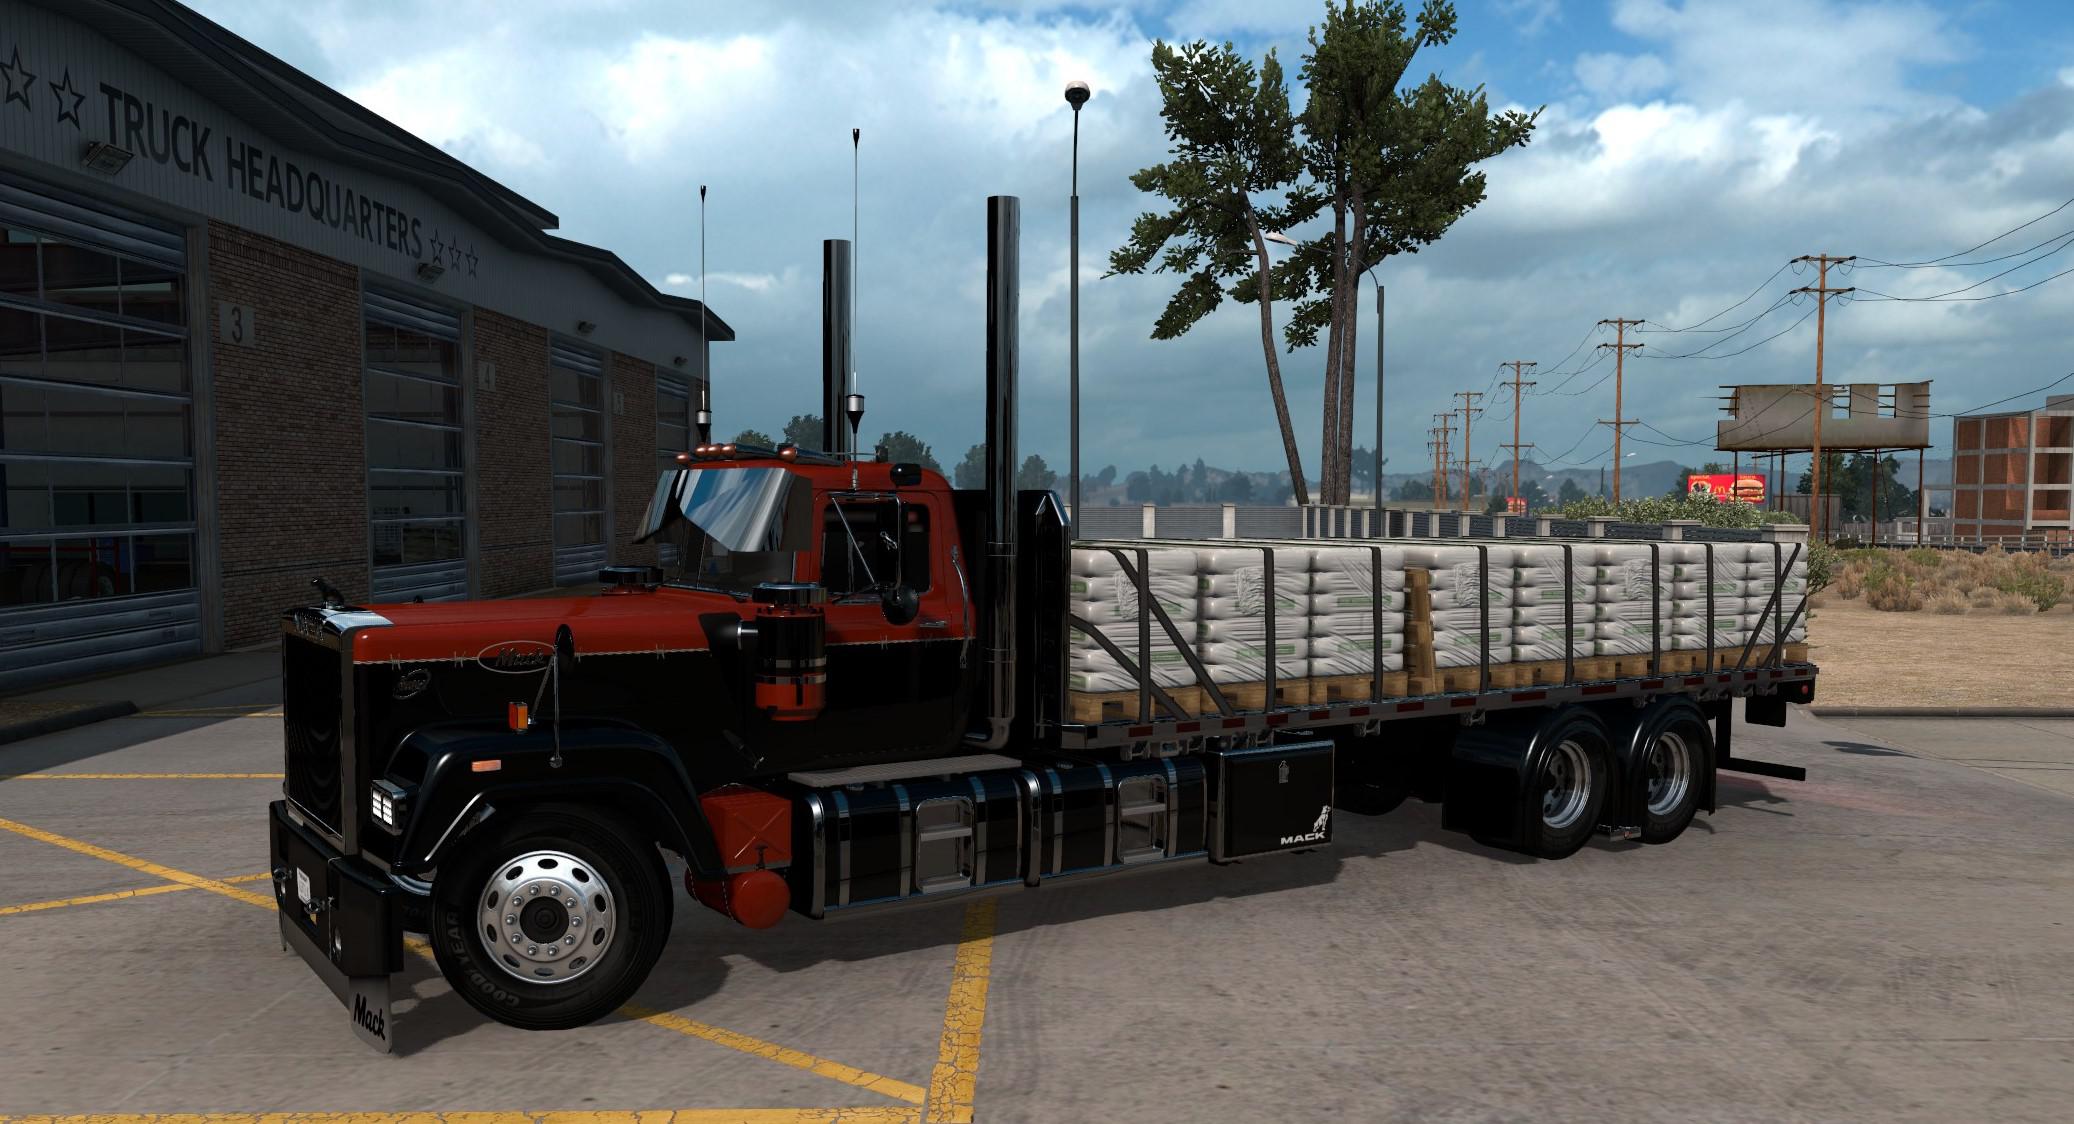 Ats Mack Superliner Truck 139x American Truck Simulator Modsclub